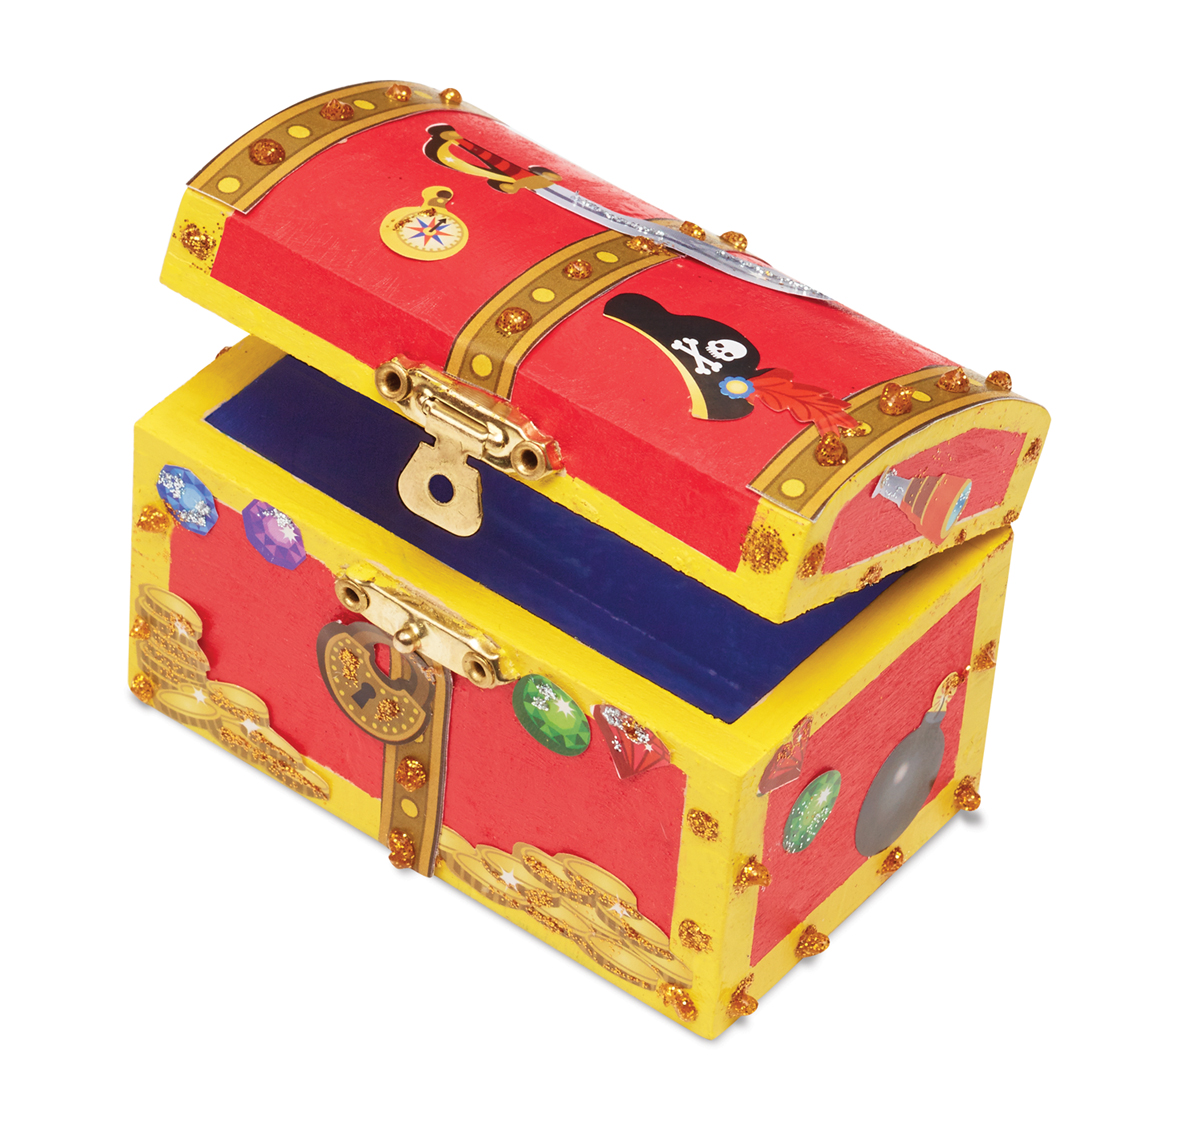 Каталка-игрушка Chicco Пиратский сундук (5958) со звуковыми эффектами коричневый/желтый/голубой